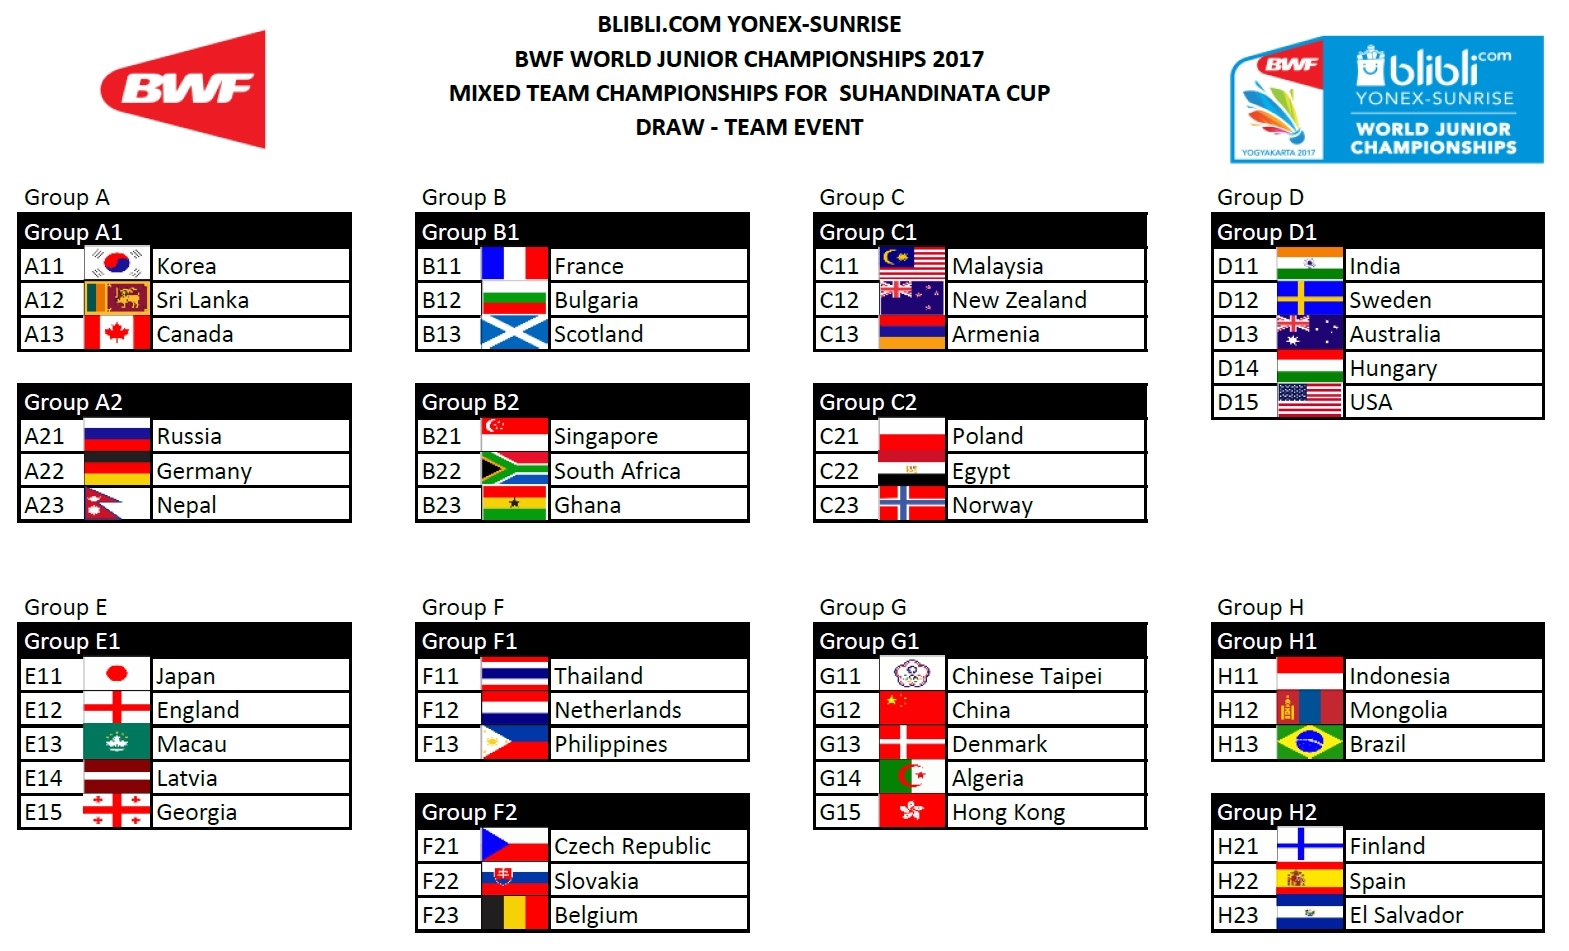 Suhandinata Cup Group Draws 2017